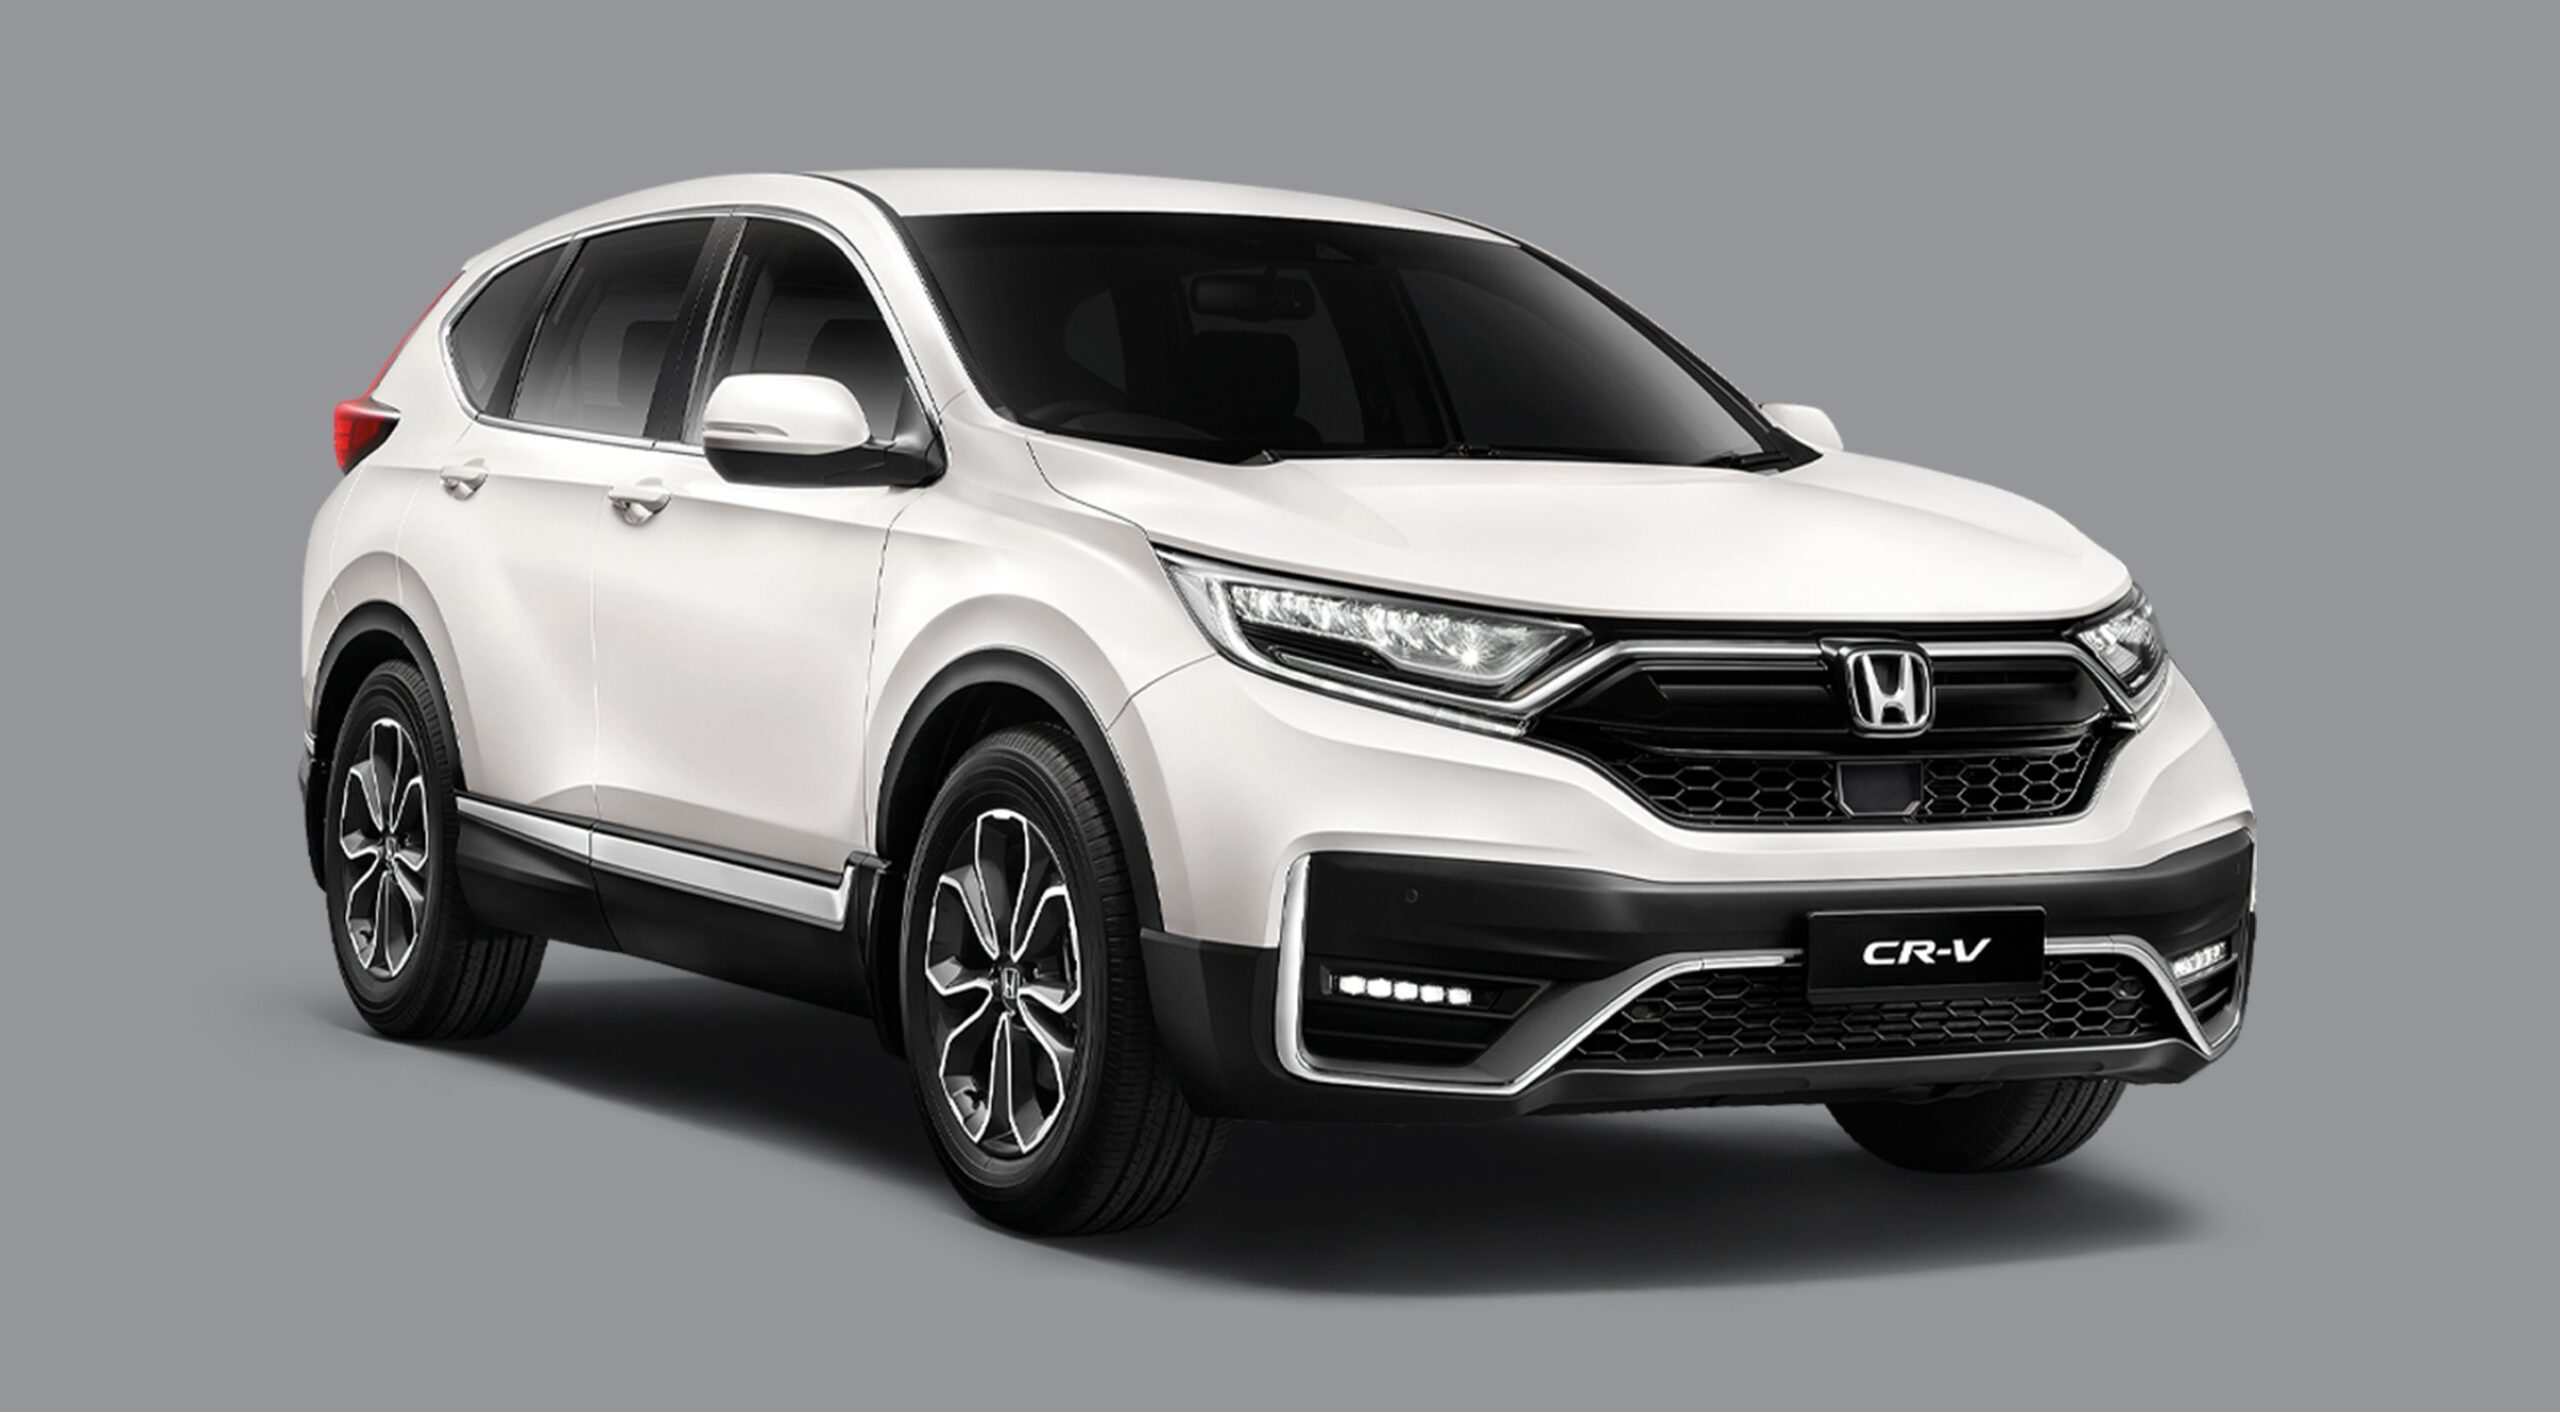 Honda CR-V Towing Capabilities- Standard and Hybrid Models